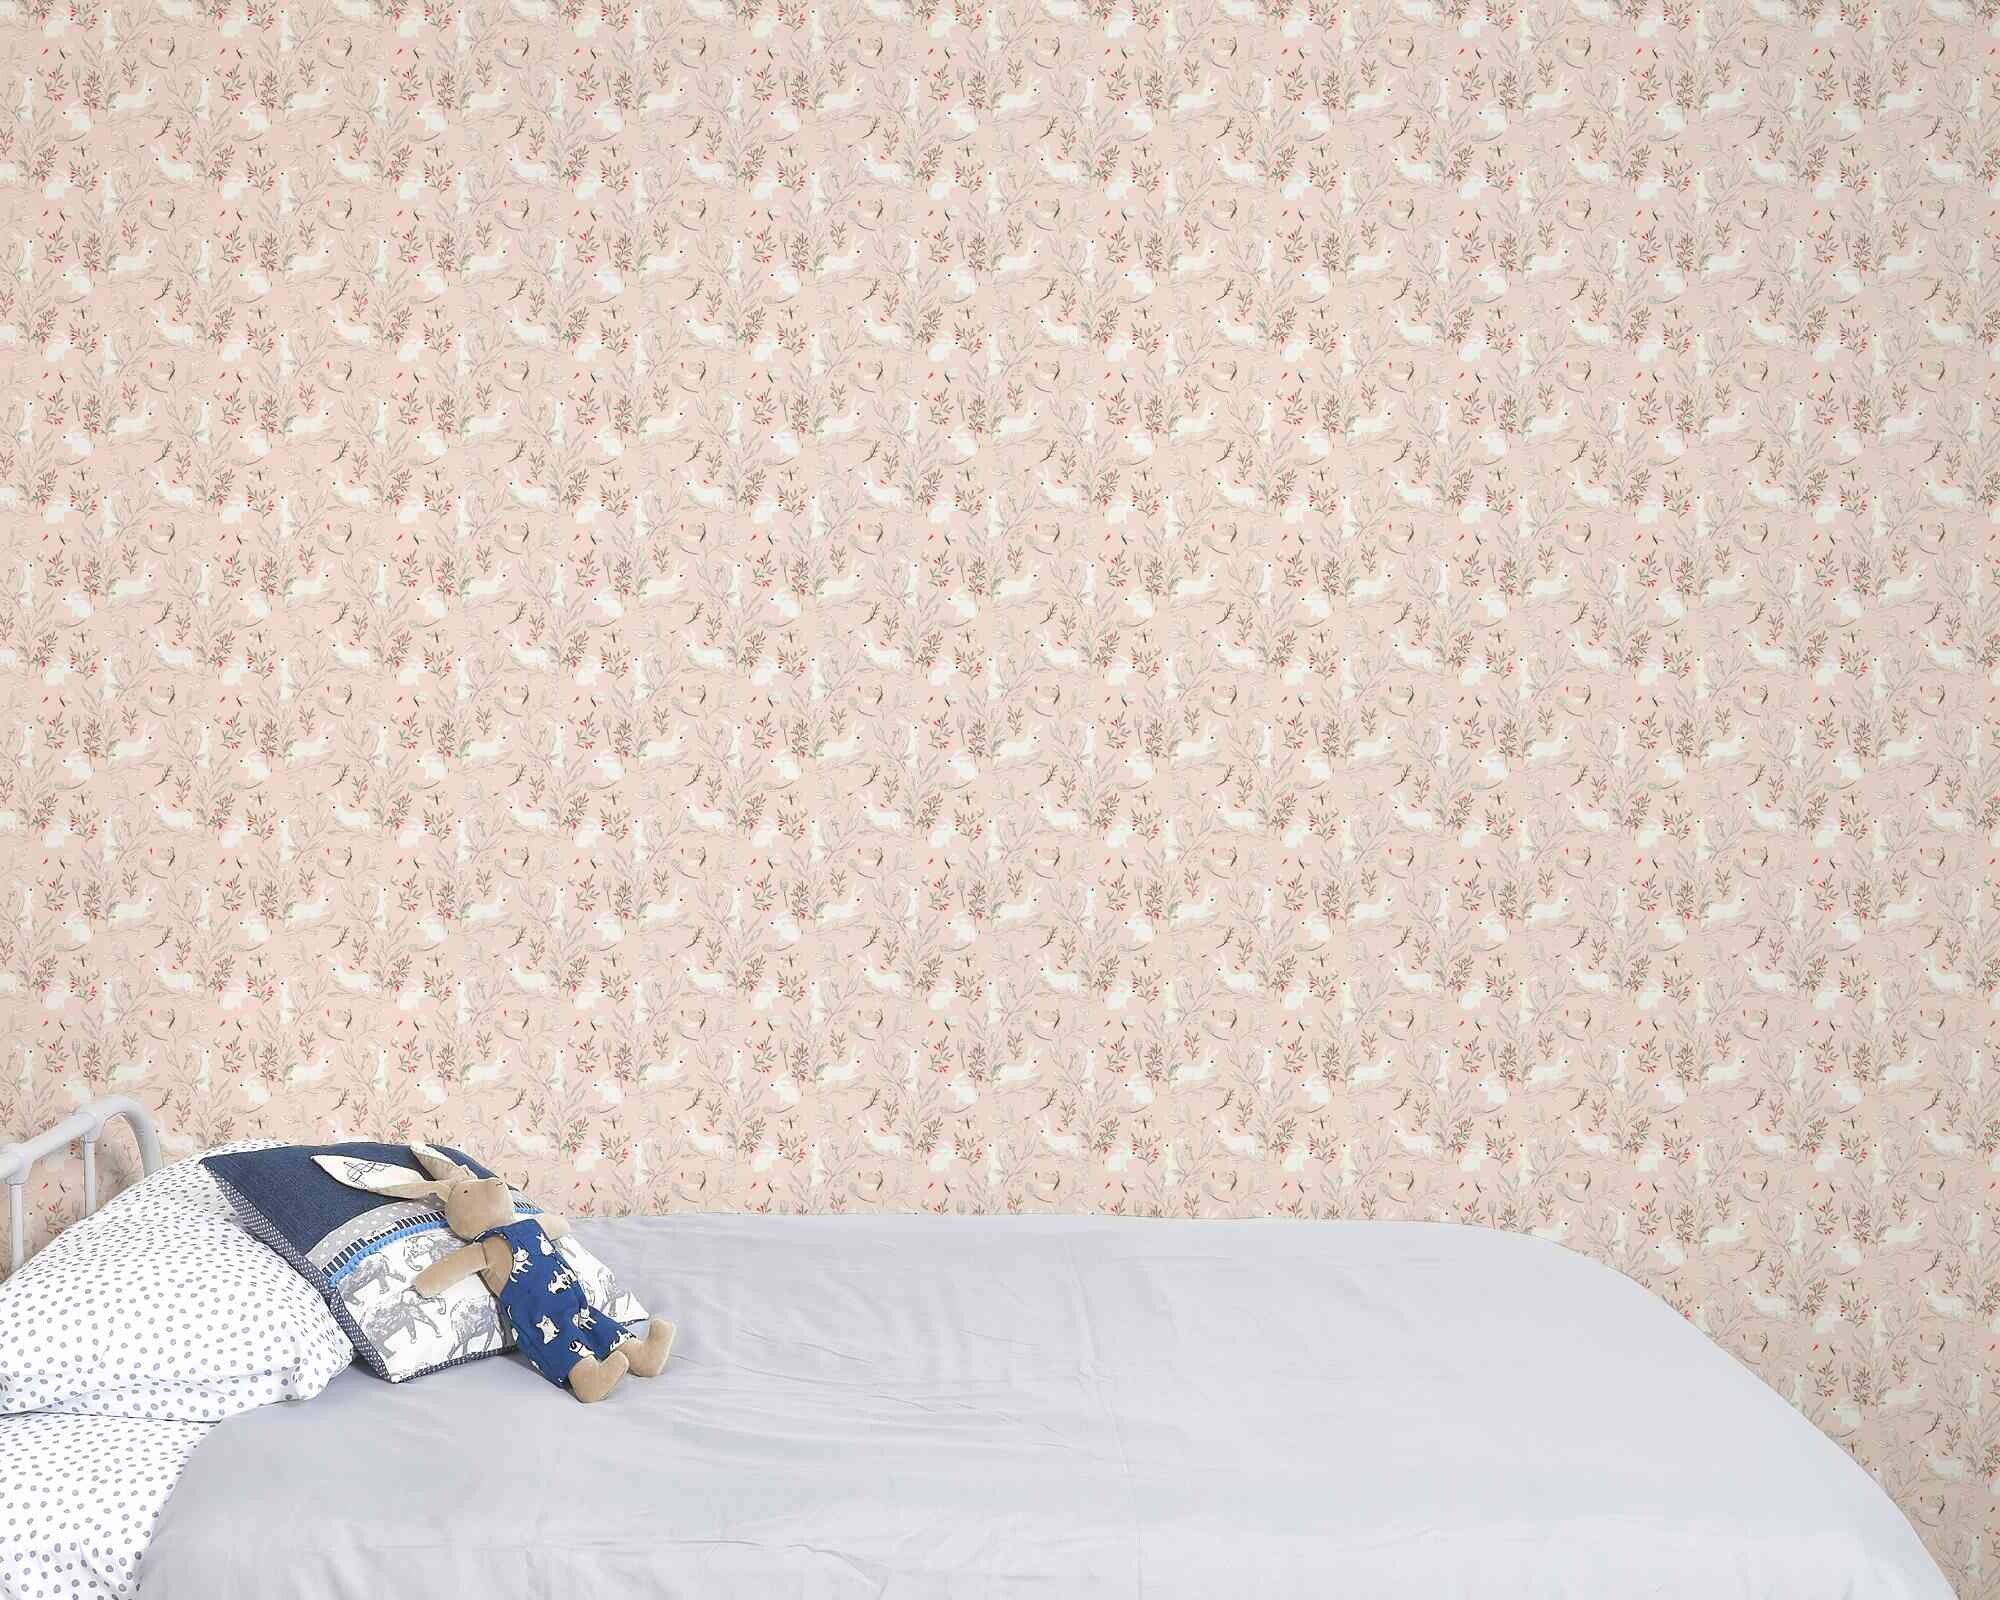 Bunny wallpaper pink